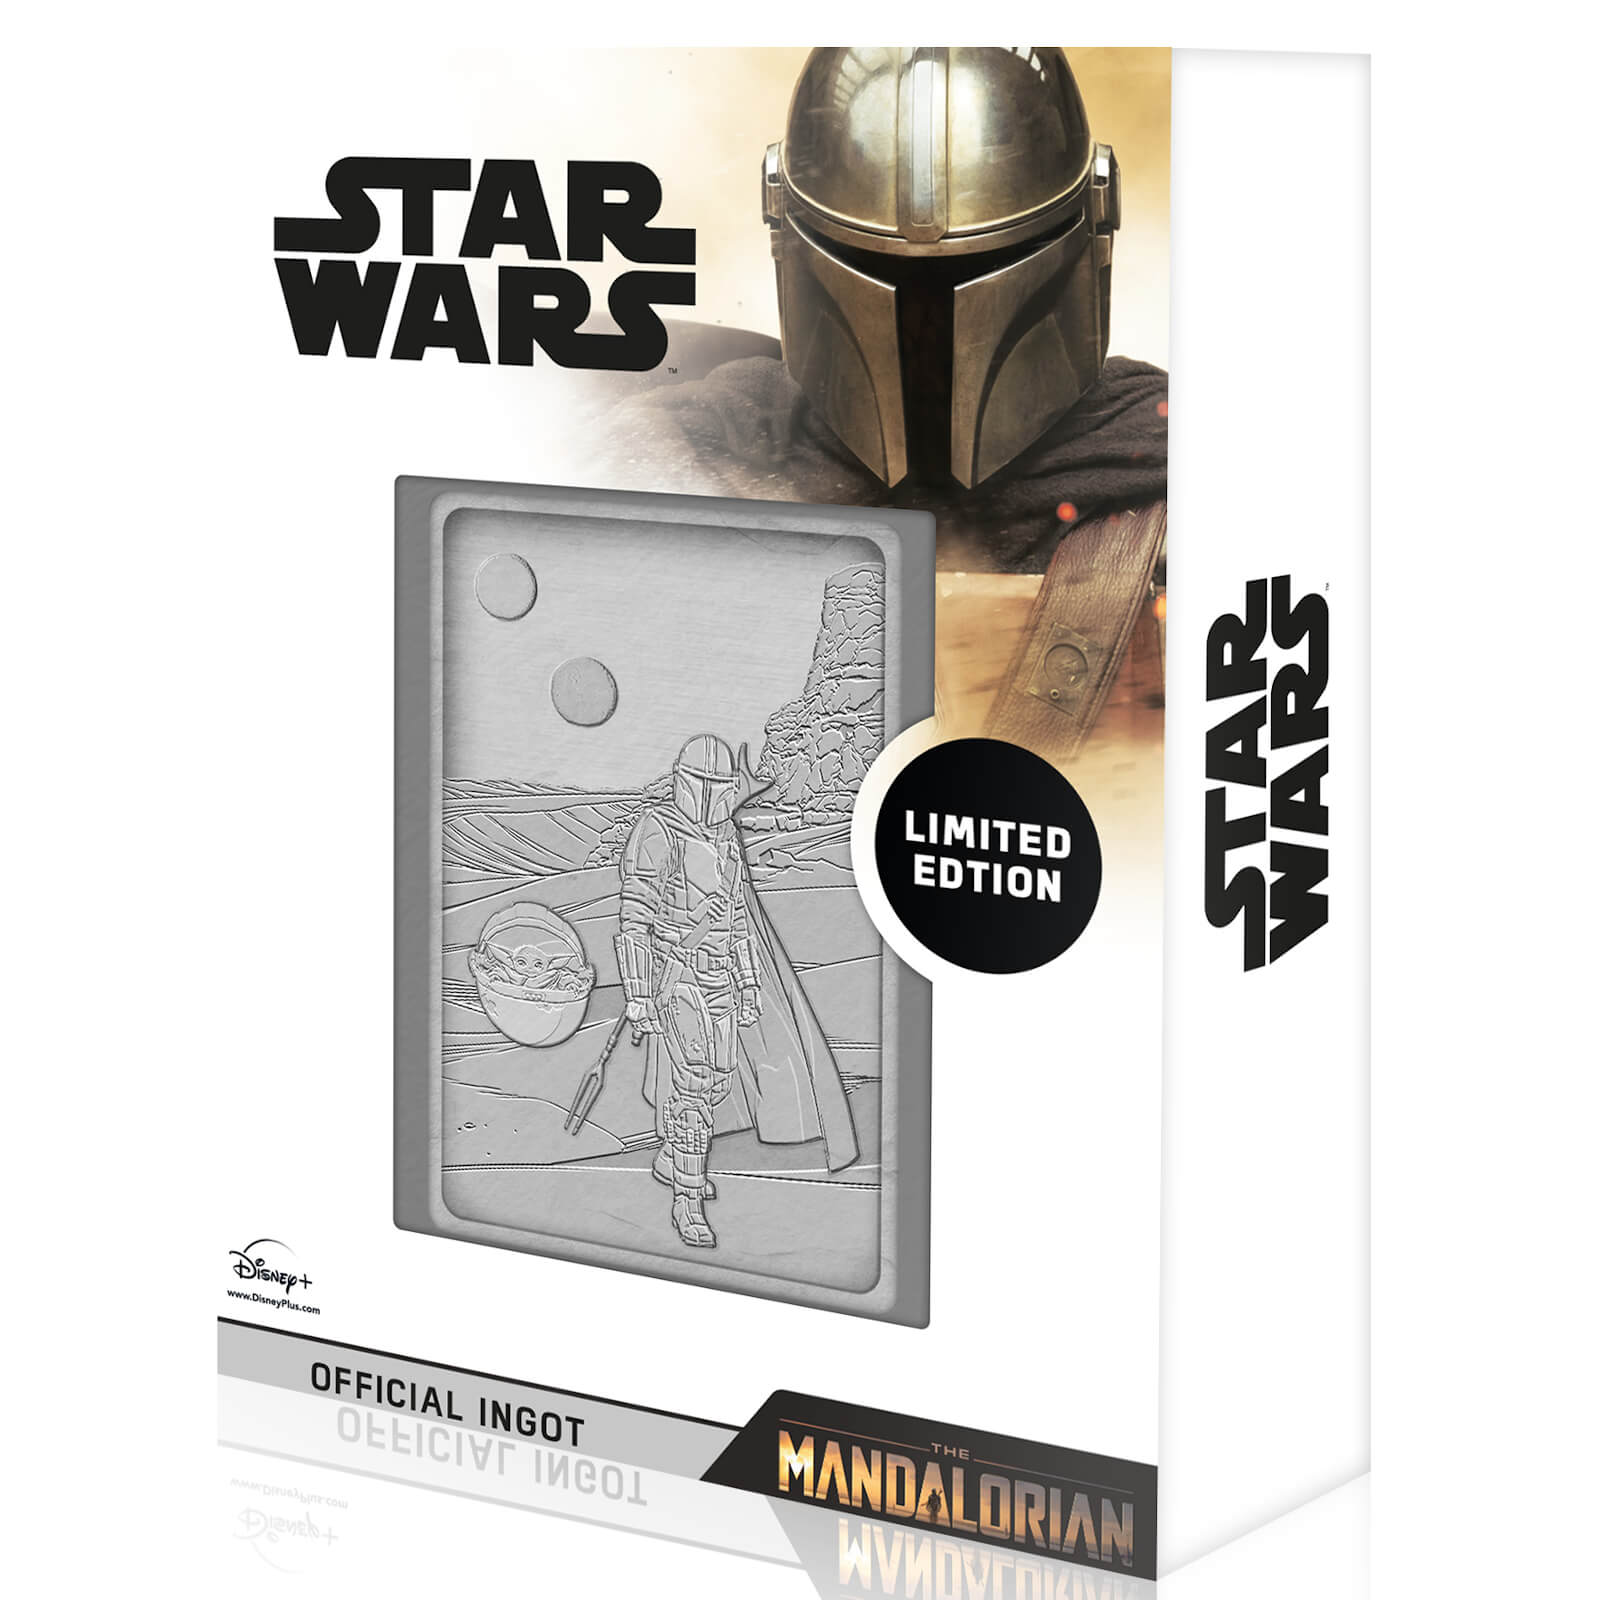 Fanattik Star Wars Iconic Scene Collection Limited Edition Ingot - Mandalorian